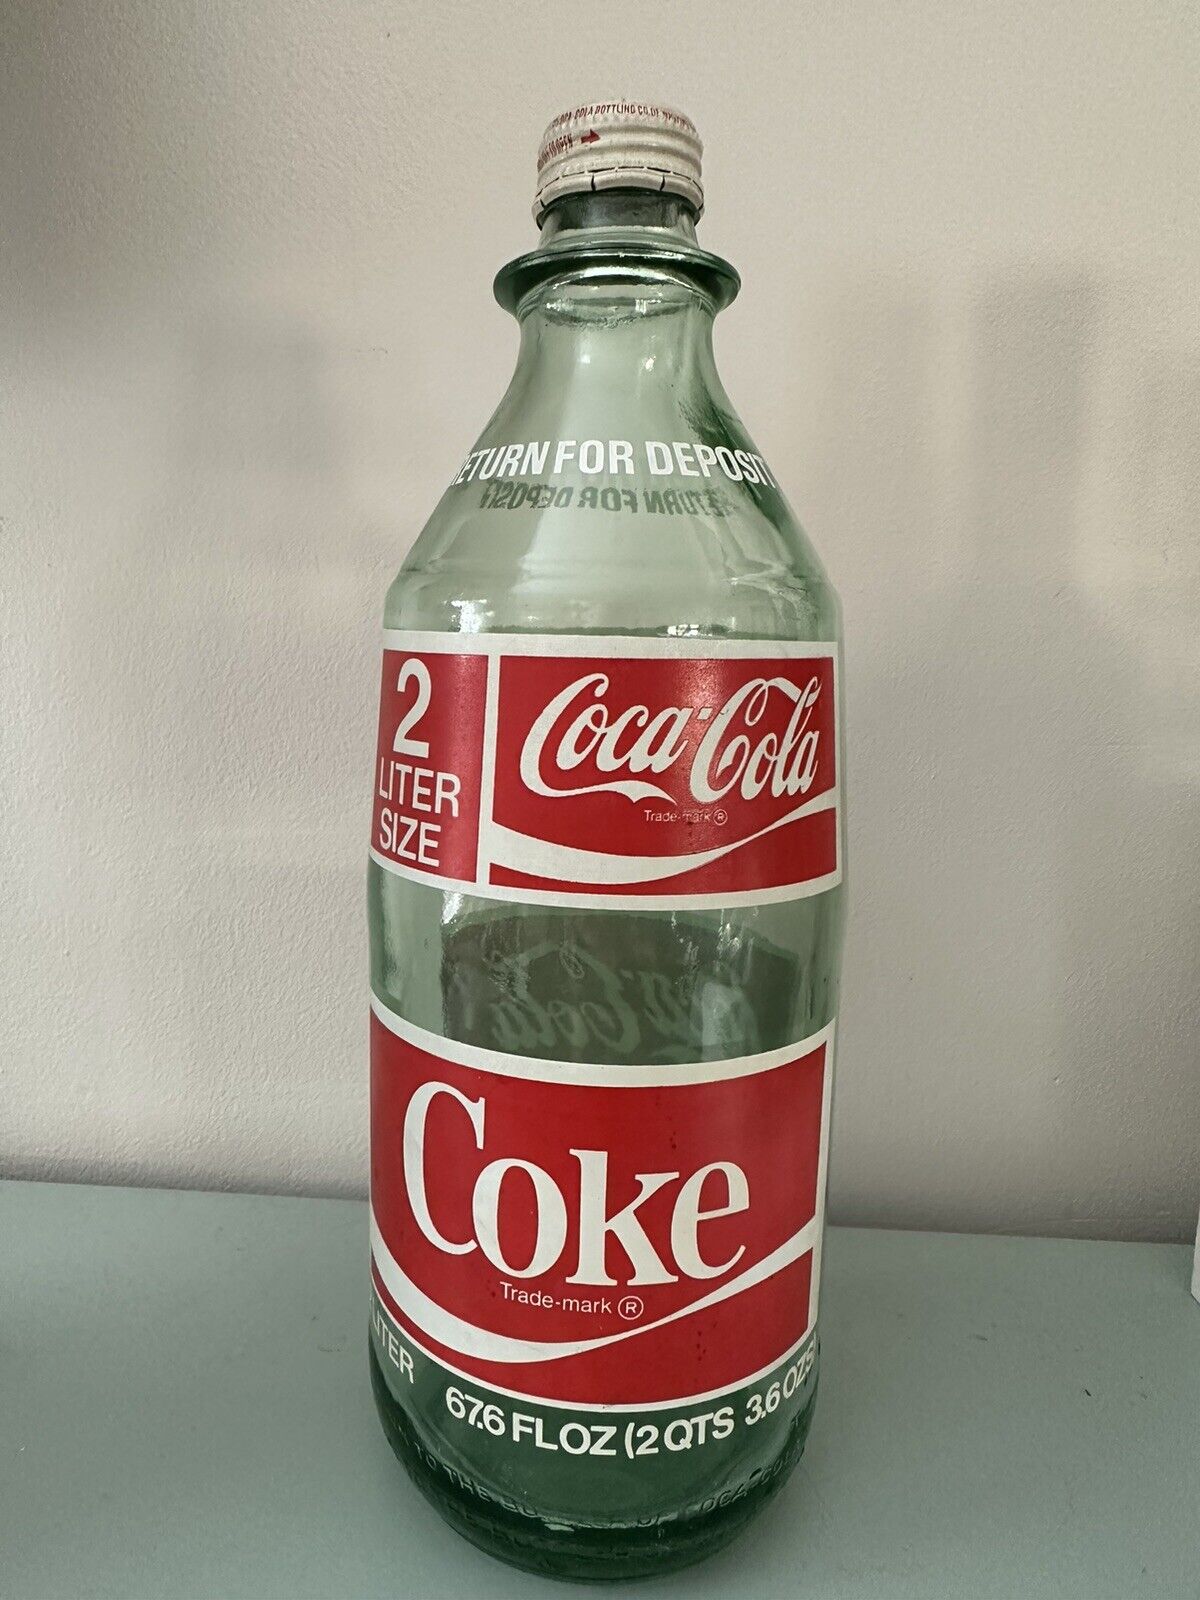 1970s Vintage Coca Cola 2 Liter Green Glass Coke Bottle 67.6 Fl Oz.